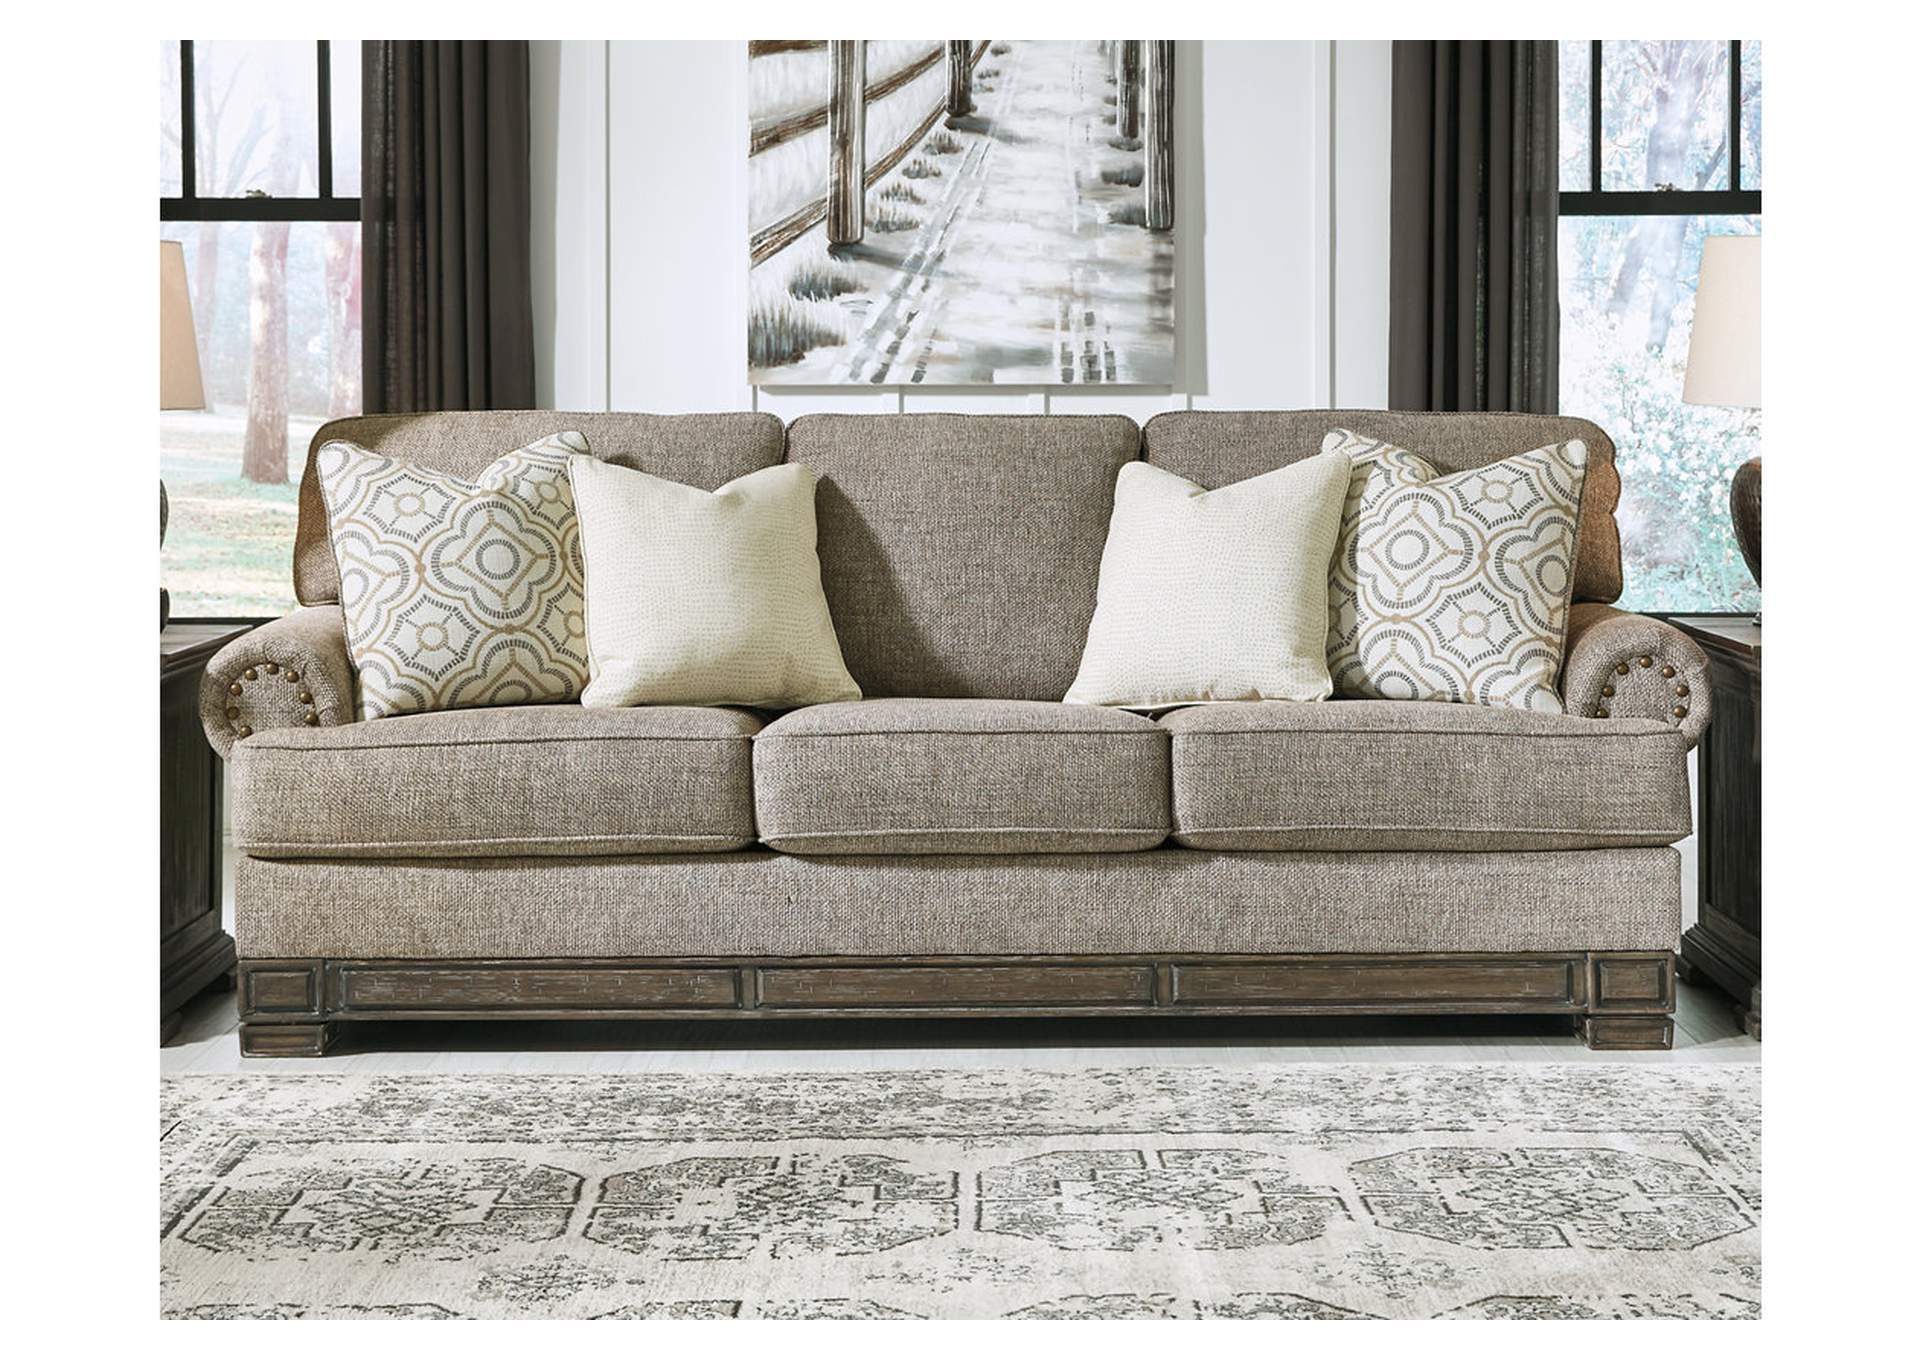 Einsgrove Sofa,Signature Design By Ashley